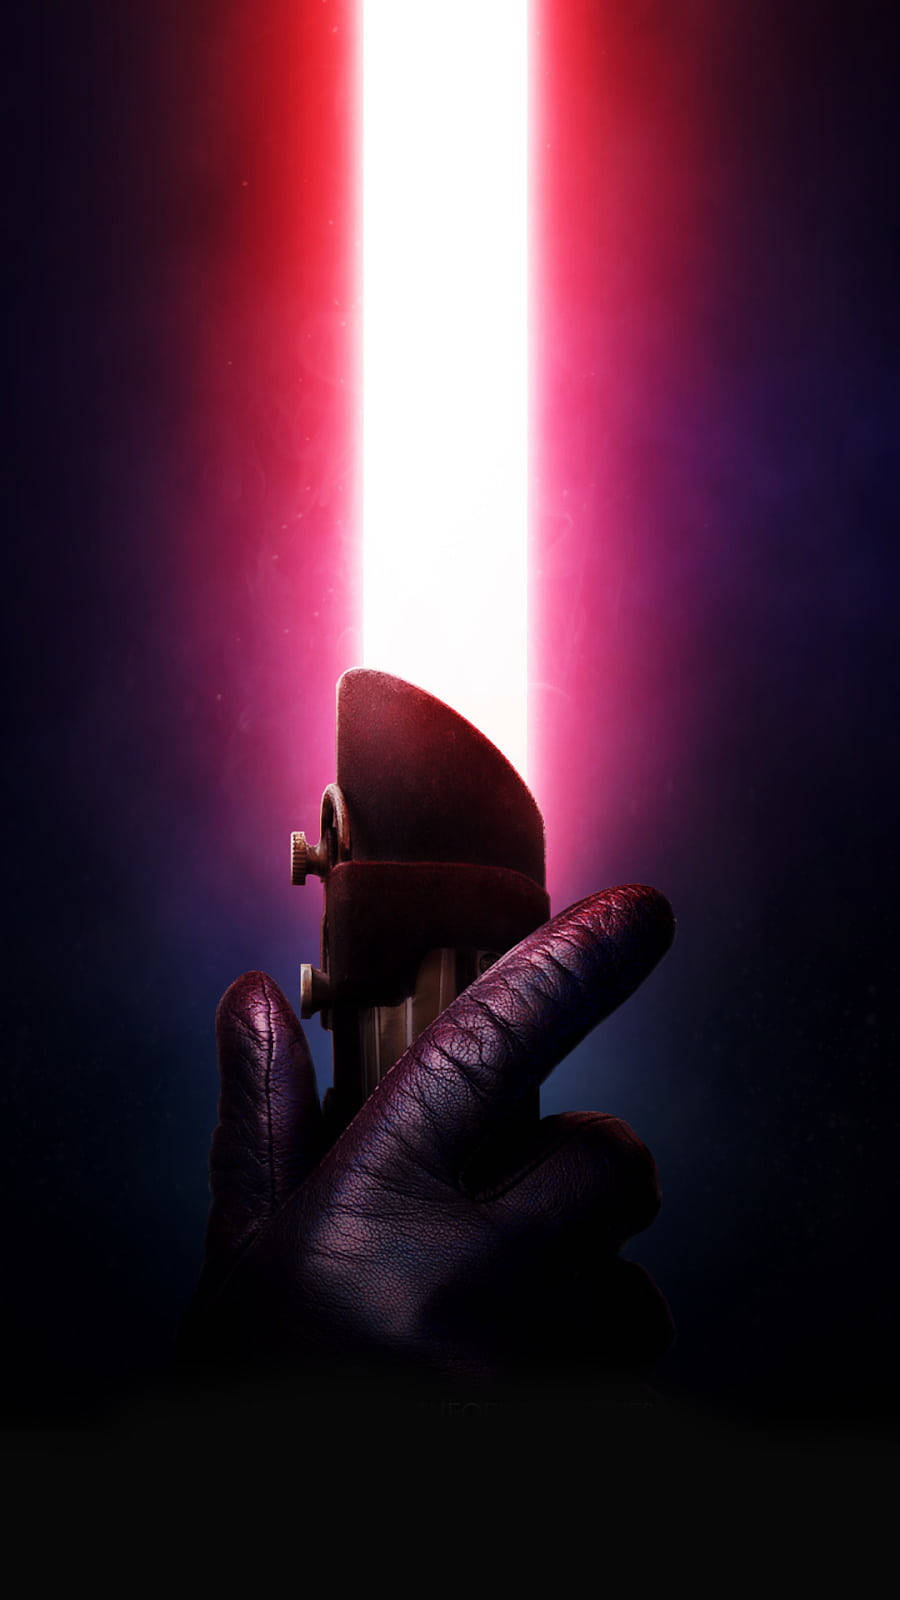 Star Wars Hand Holding Red Lightsaber Background